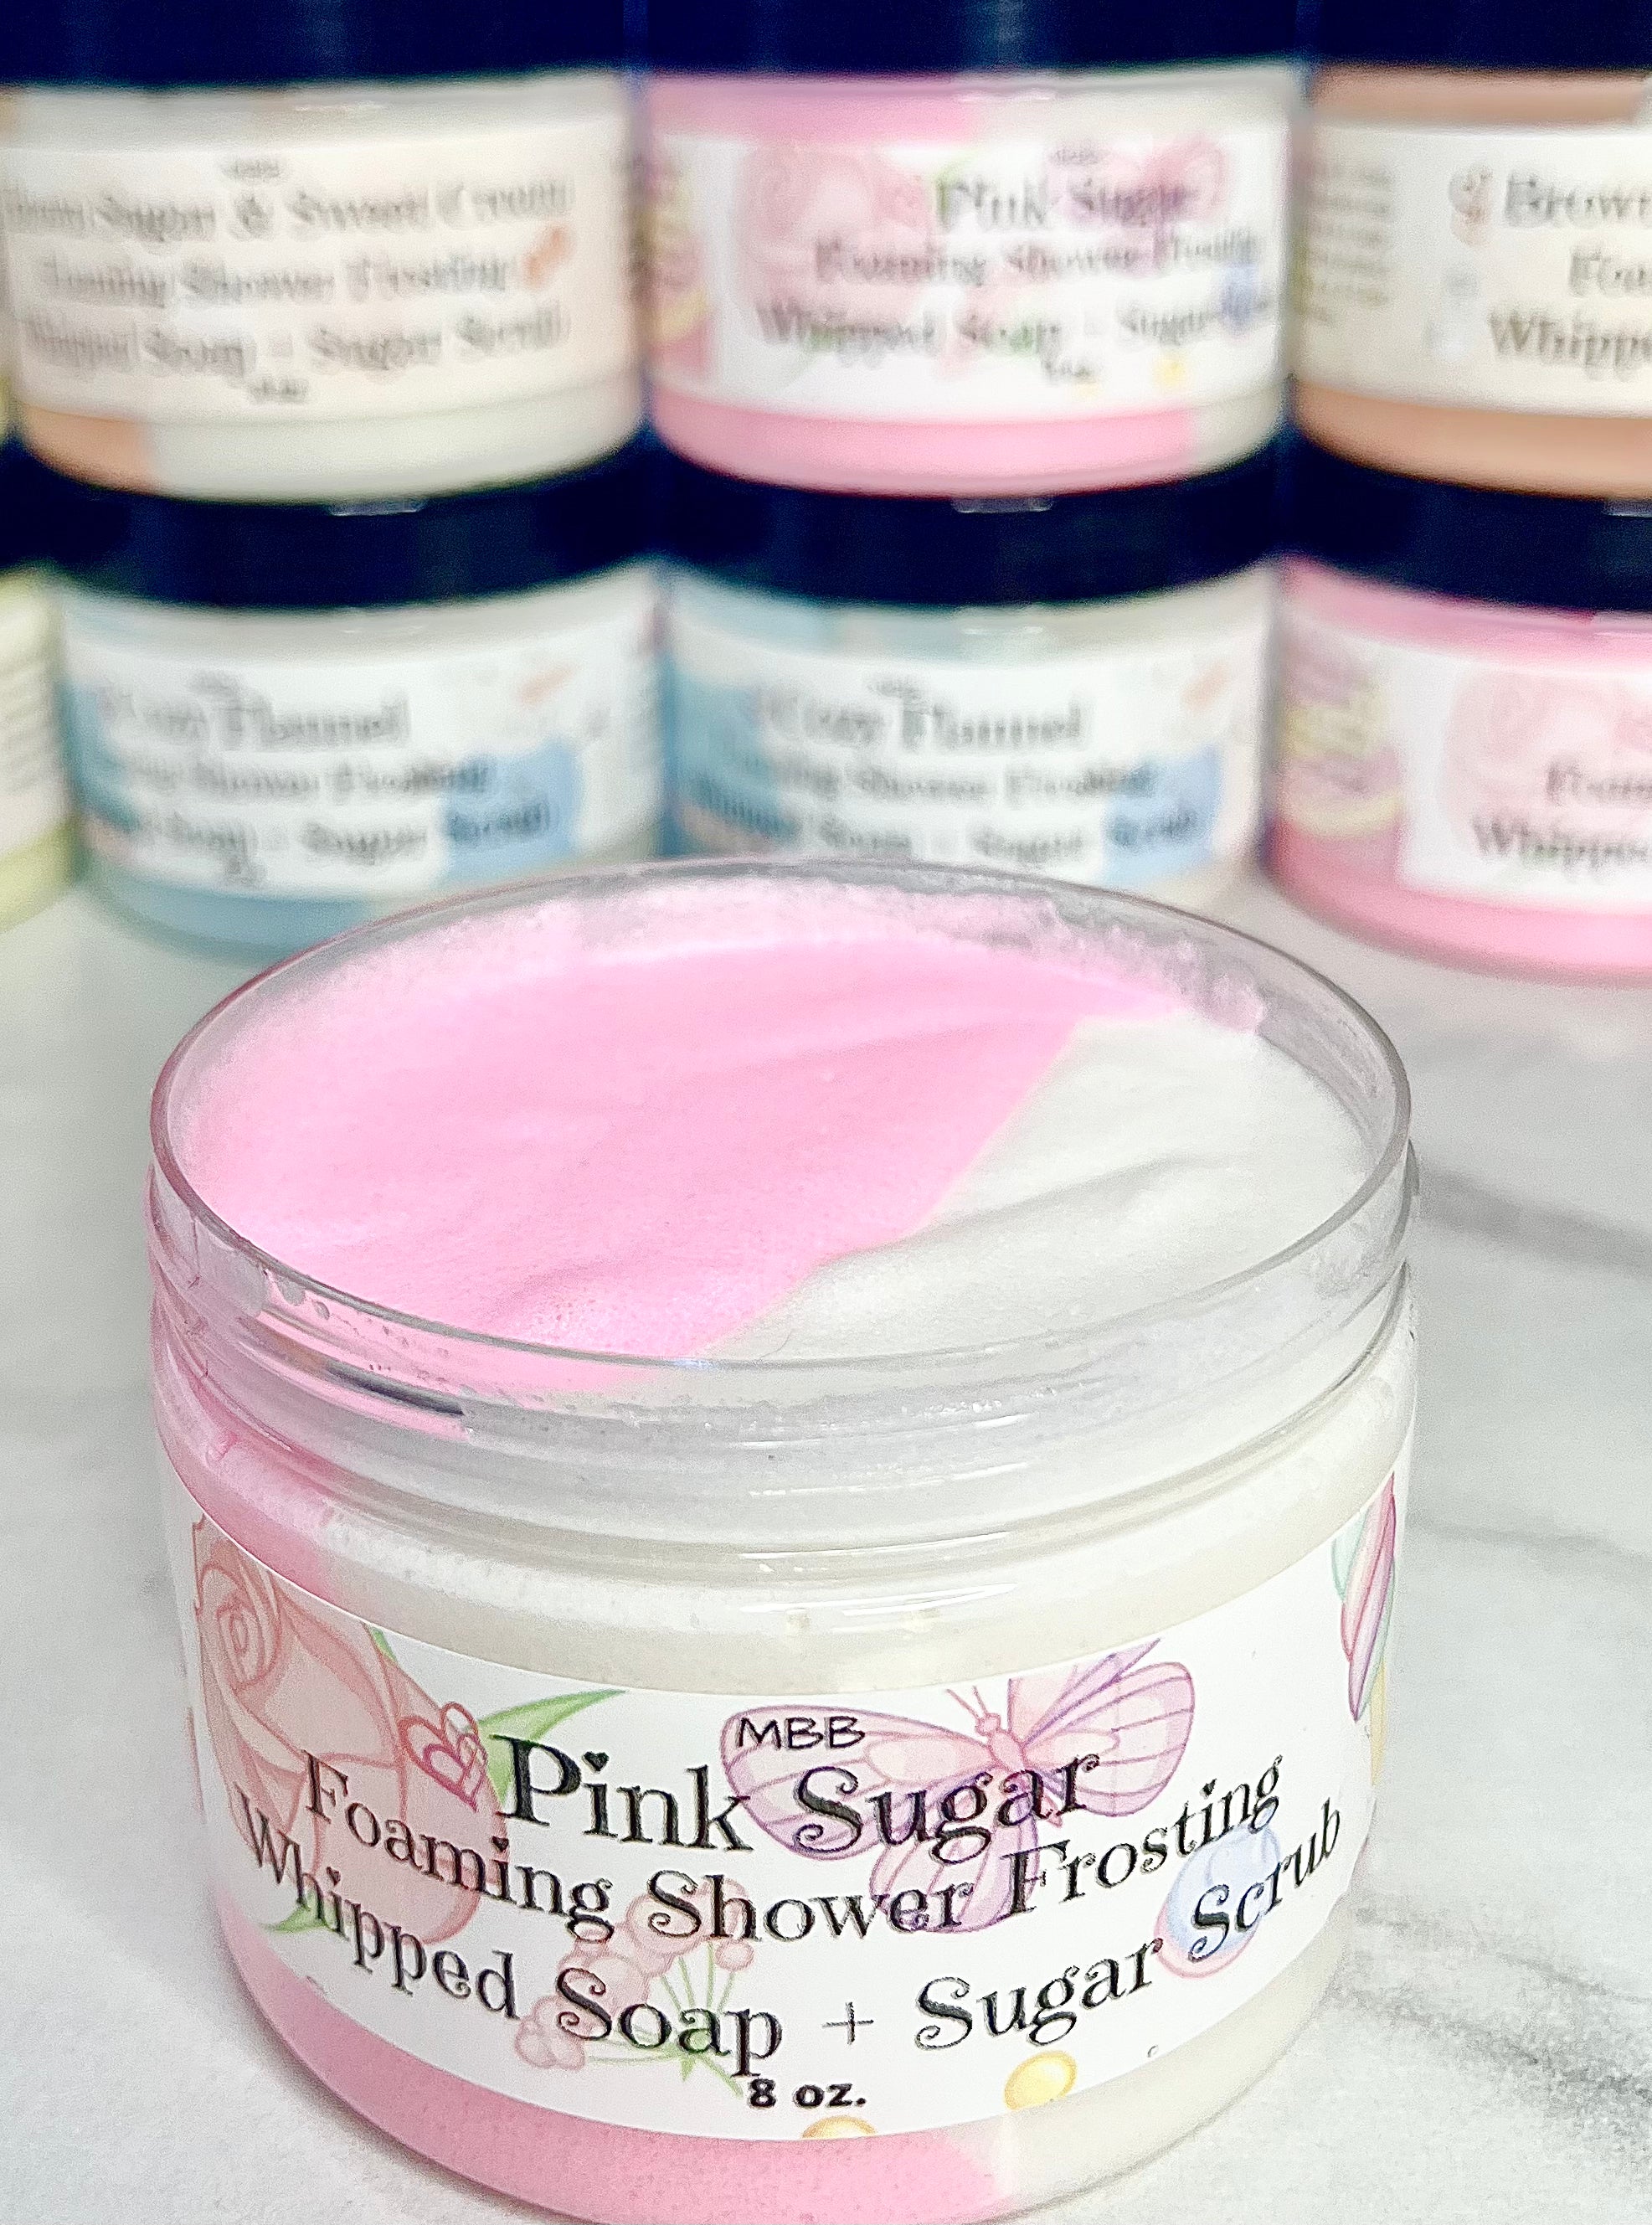 Pink Sugar Foaming Shower Frosting | Whipped Soap and Sugar Scrub | Sugar Scrub